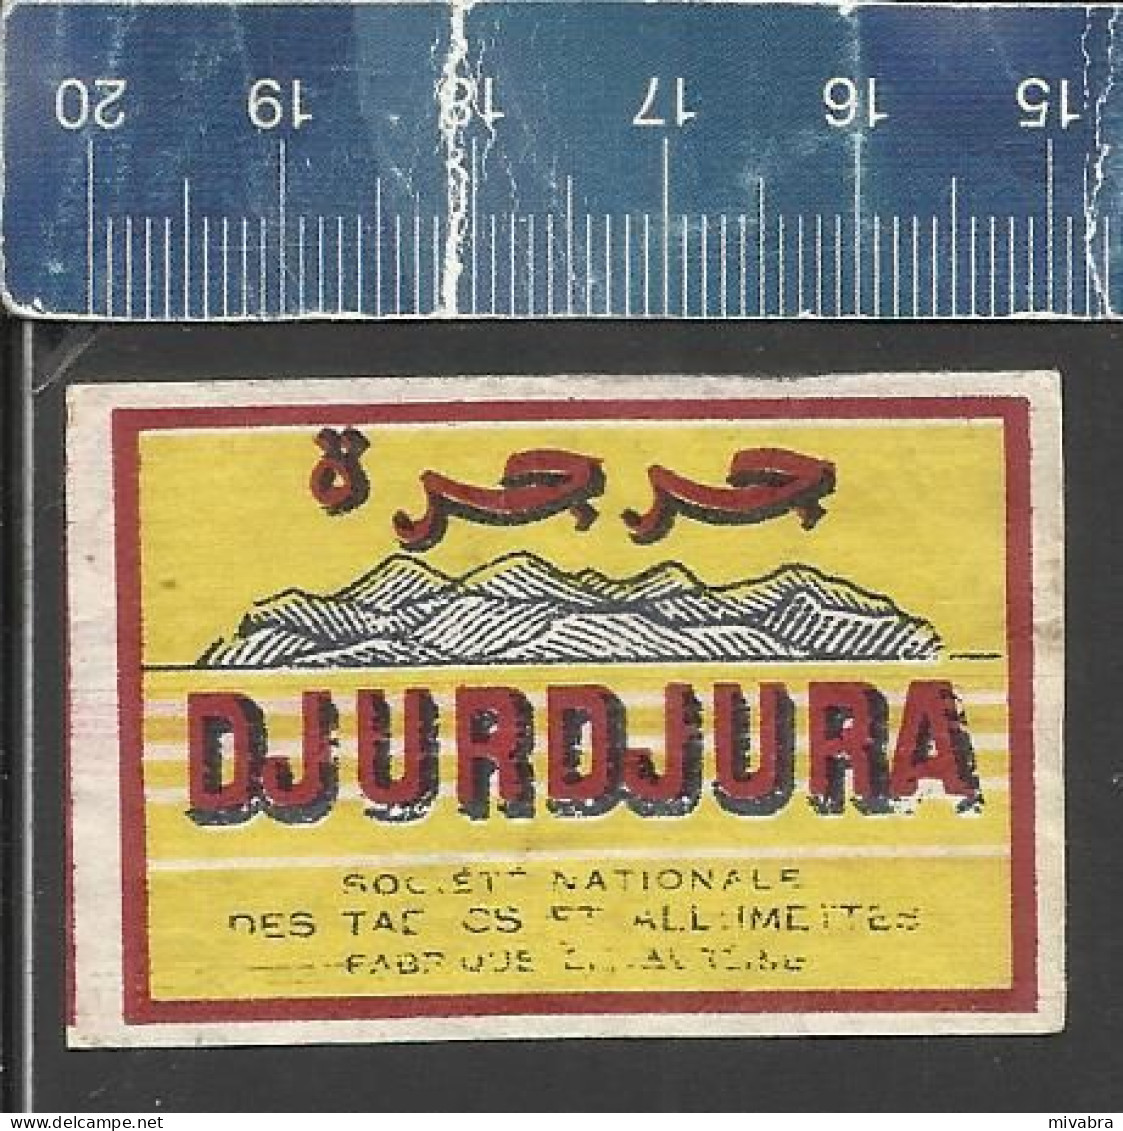 DJURDJURA ( MOUNTAIN RANGE OF THE TELL ATLAS ) - OLD MATCHBOX LABEL ALGERIA - Zündholzschachteletiketten